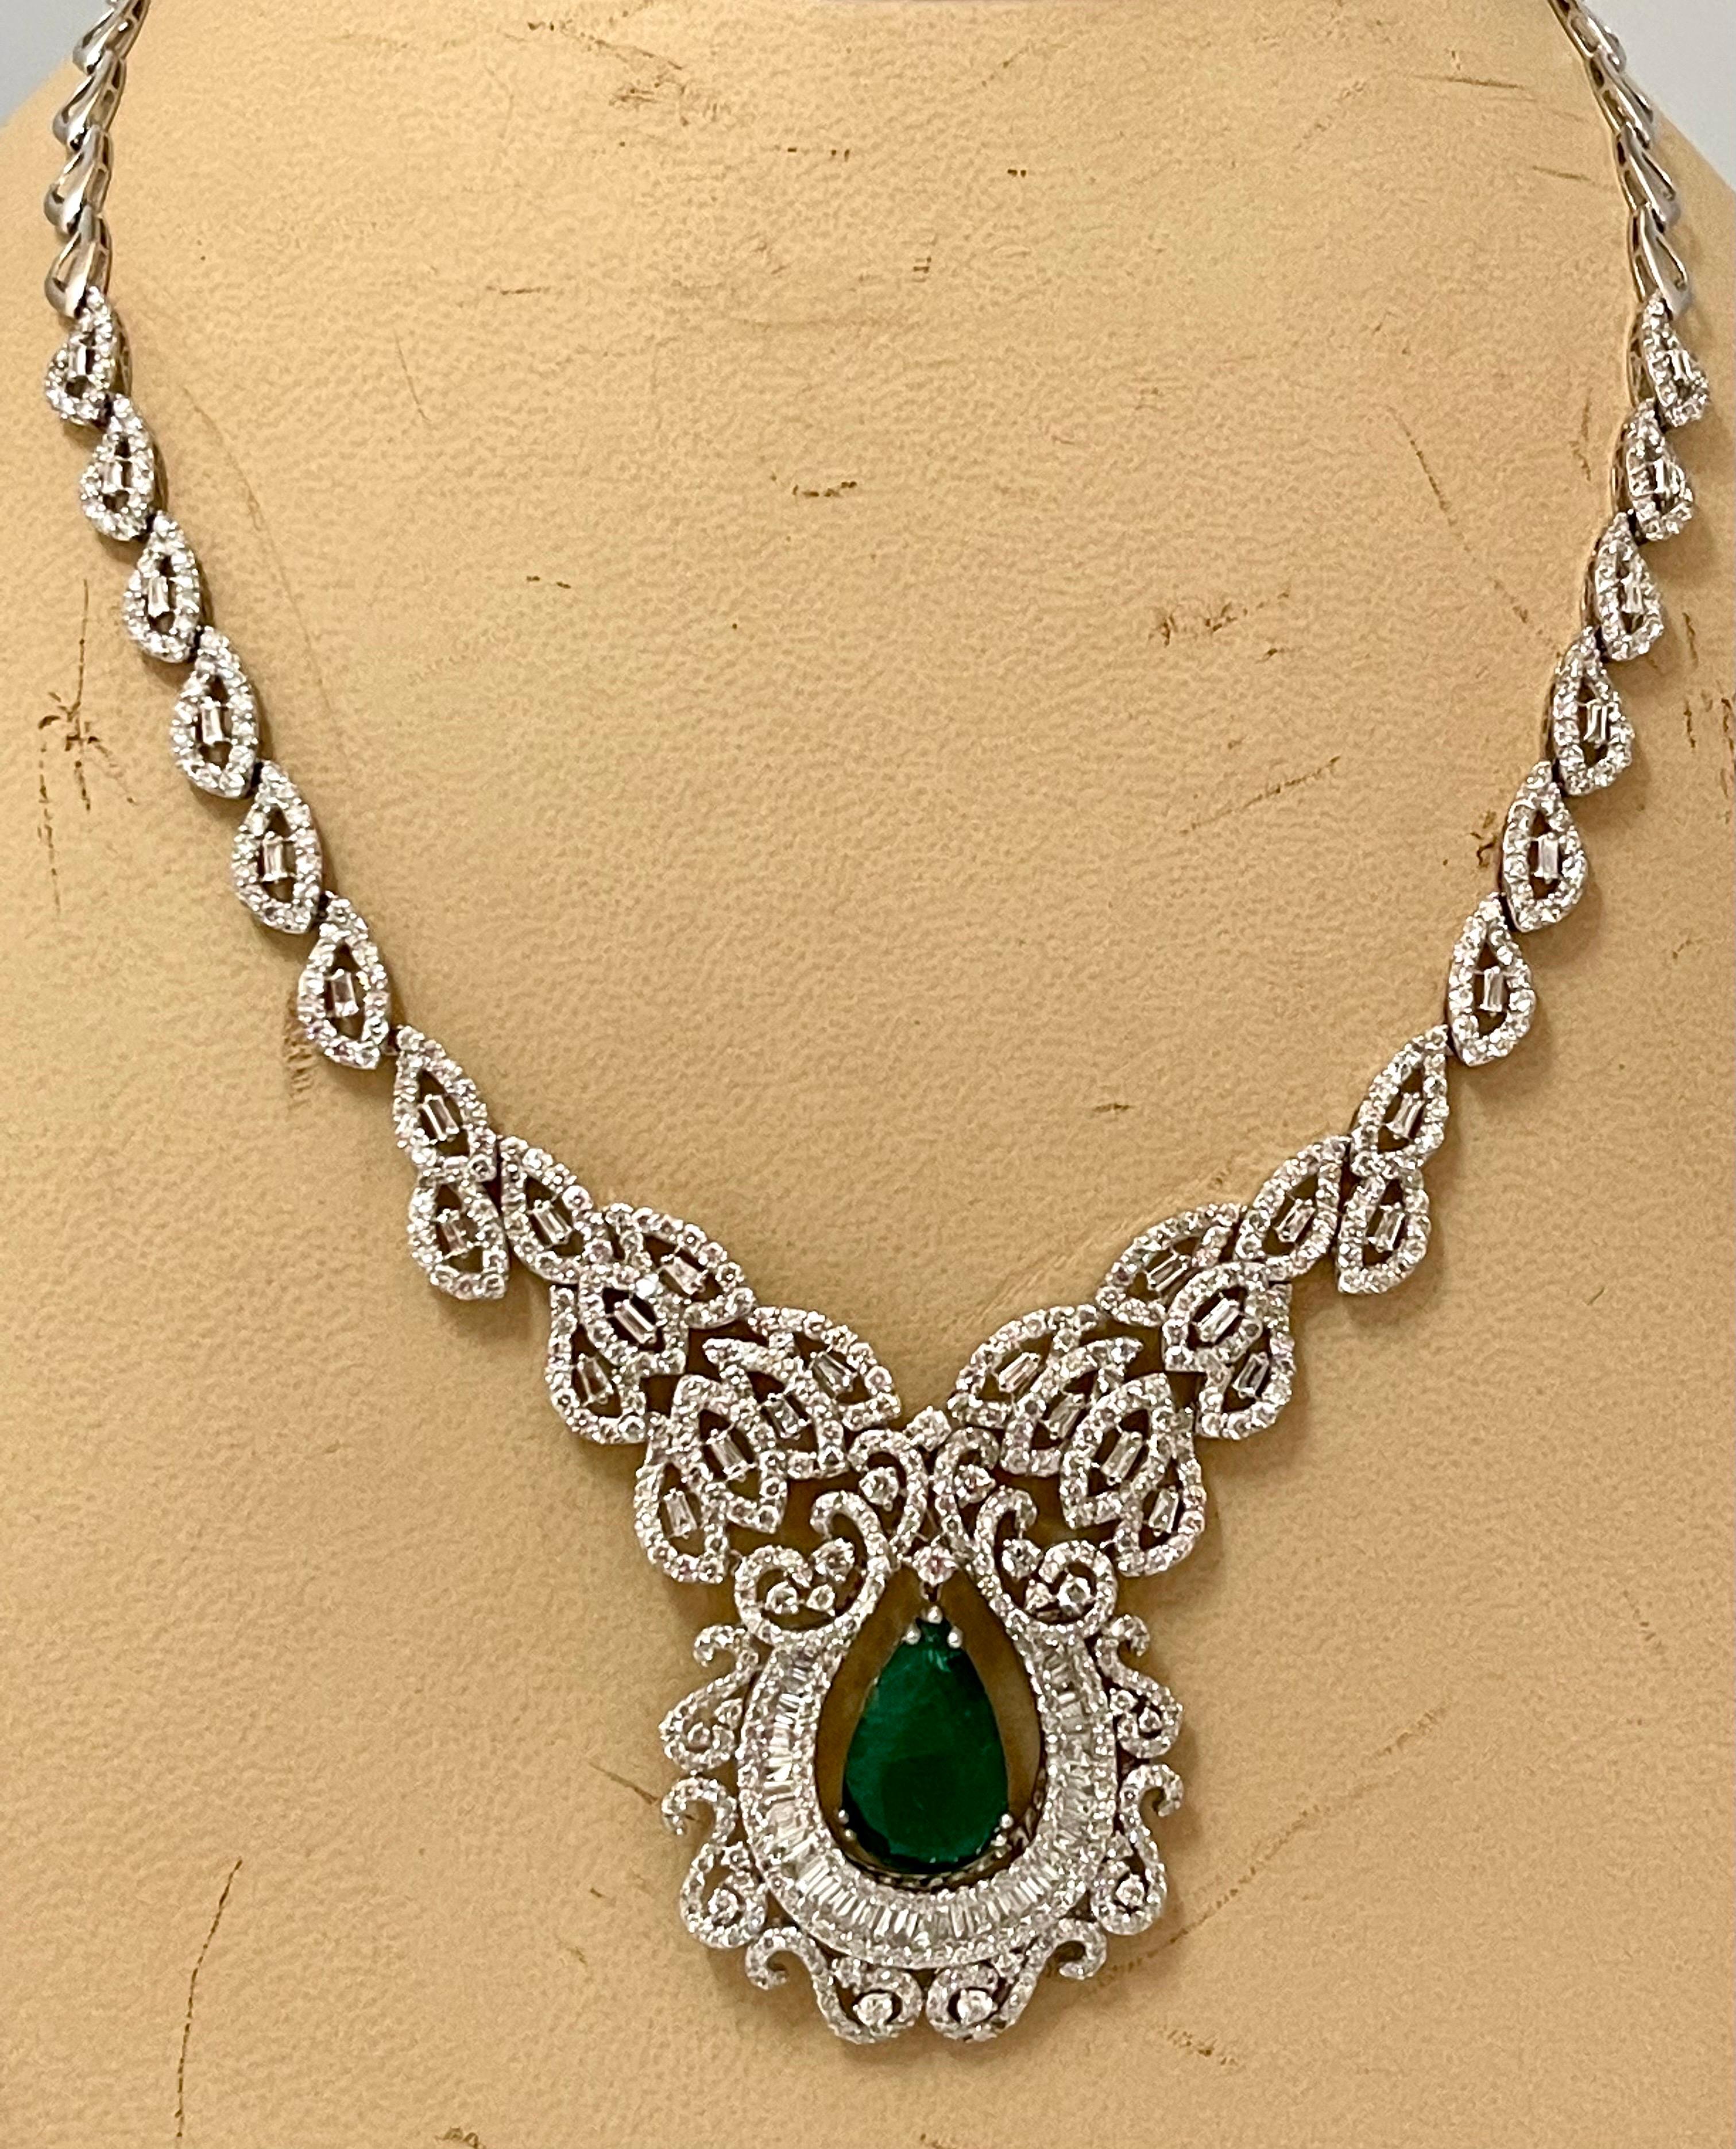 11 Ct Pear Shape Zambian Natural Emerald & 17 Ct Diamond Necklace 18 Karat Gold For Sale 6